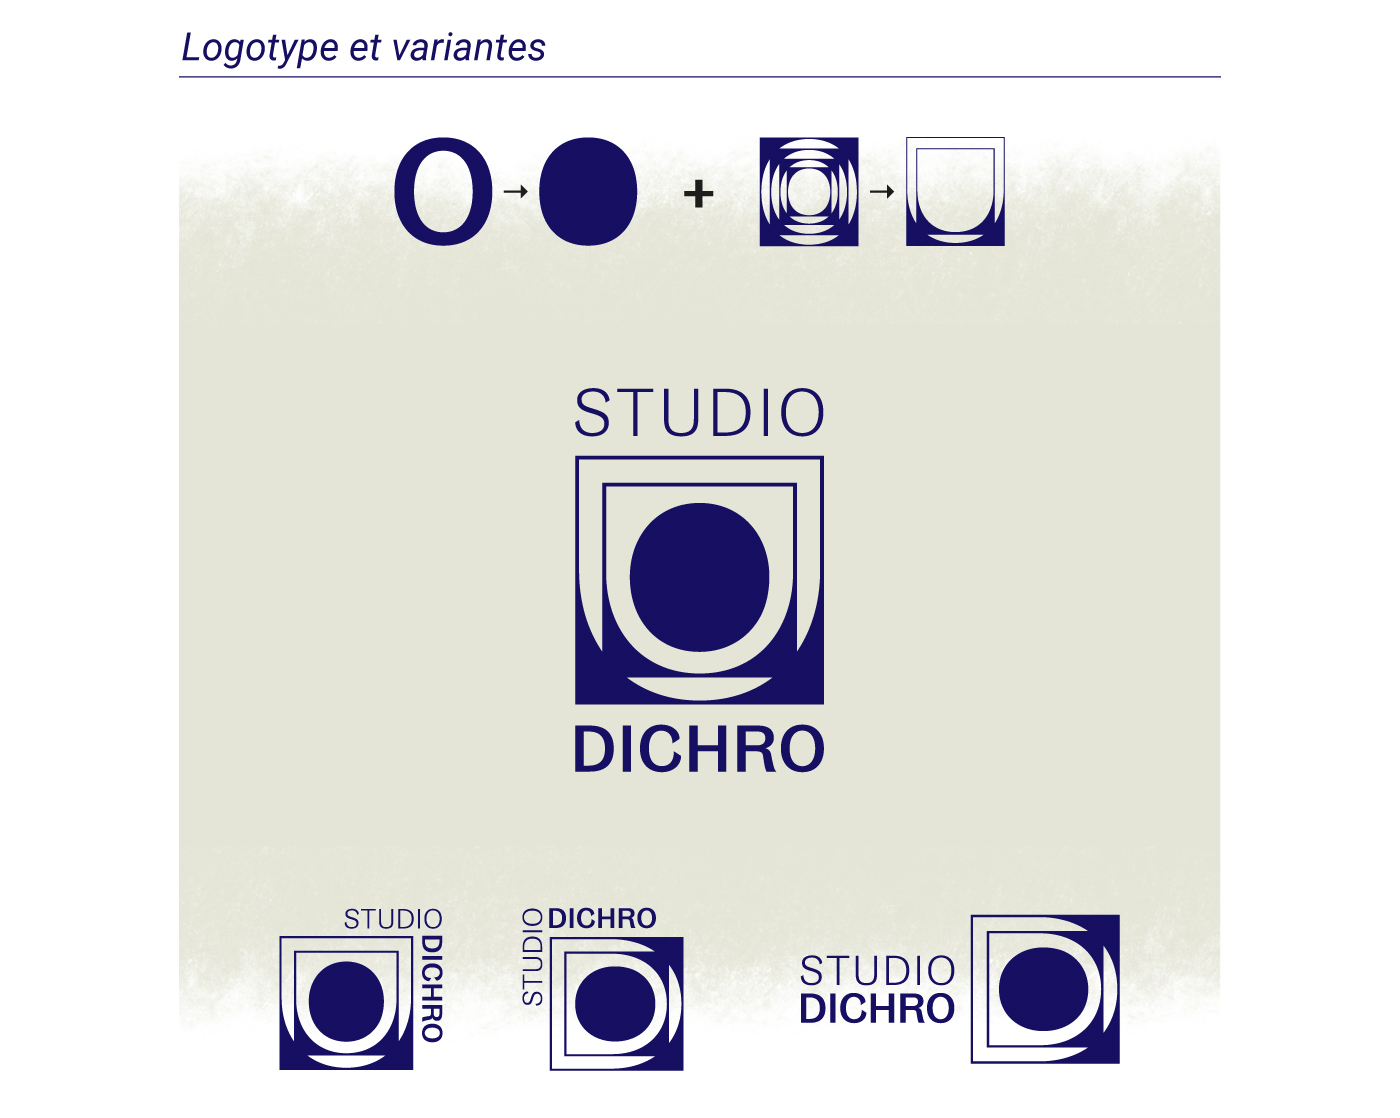 logotype du Studio Dichro, principe de construction et variantes